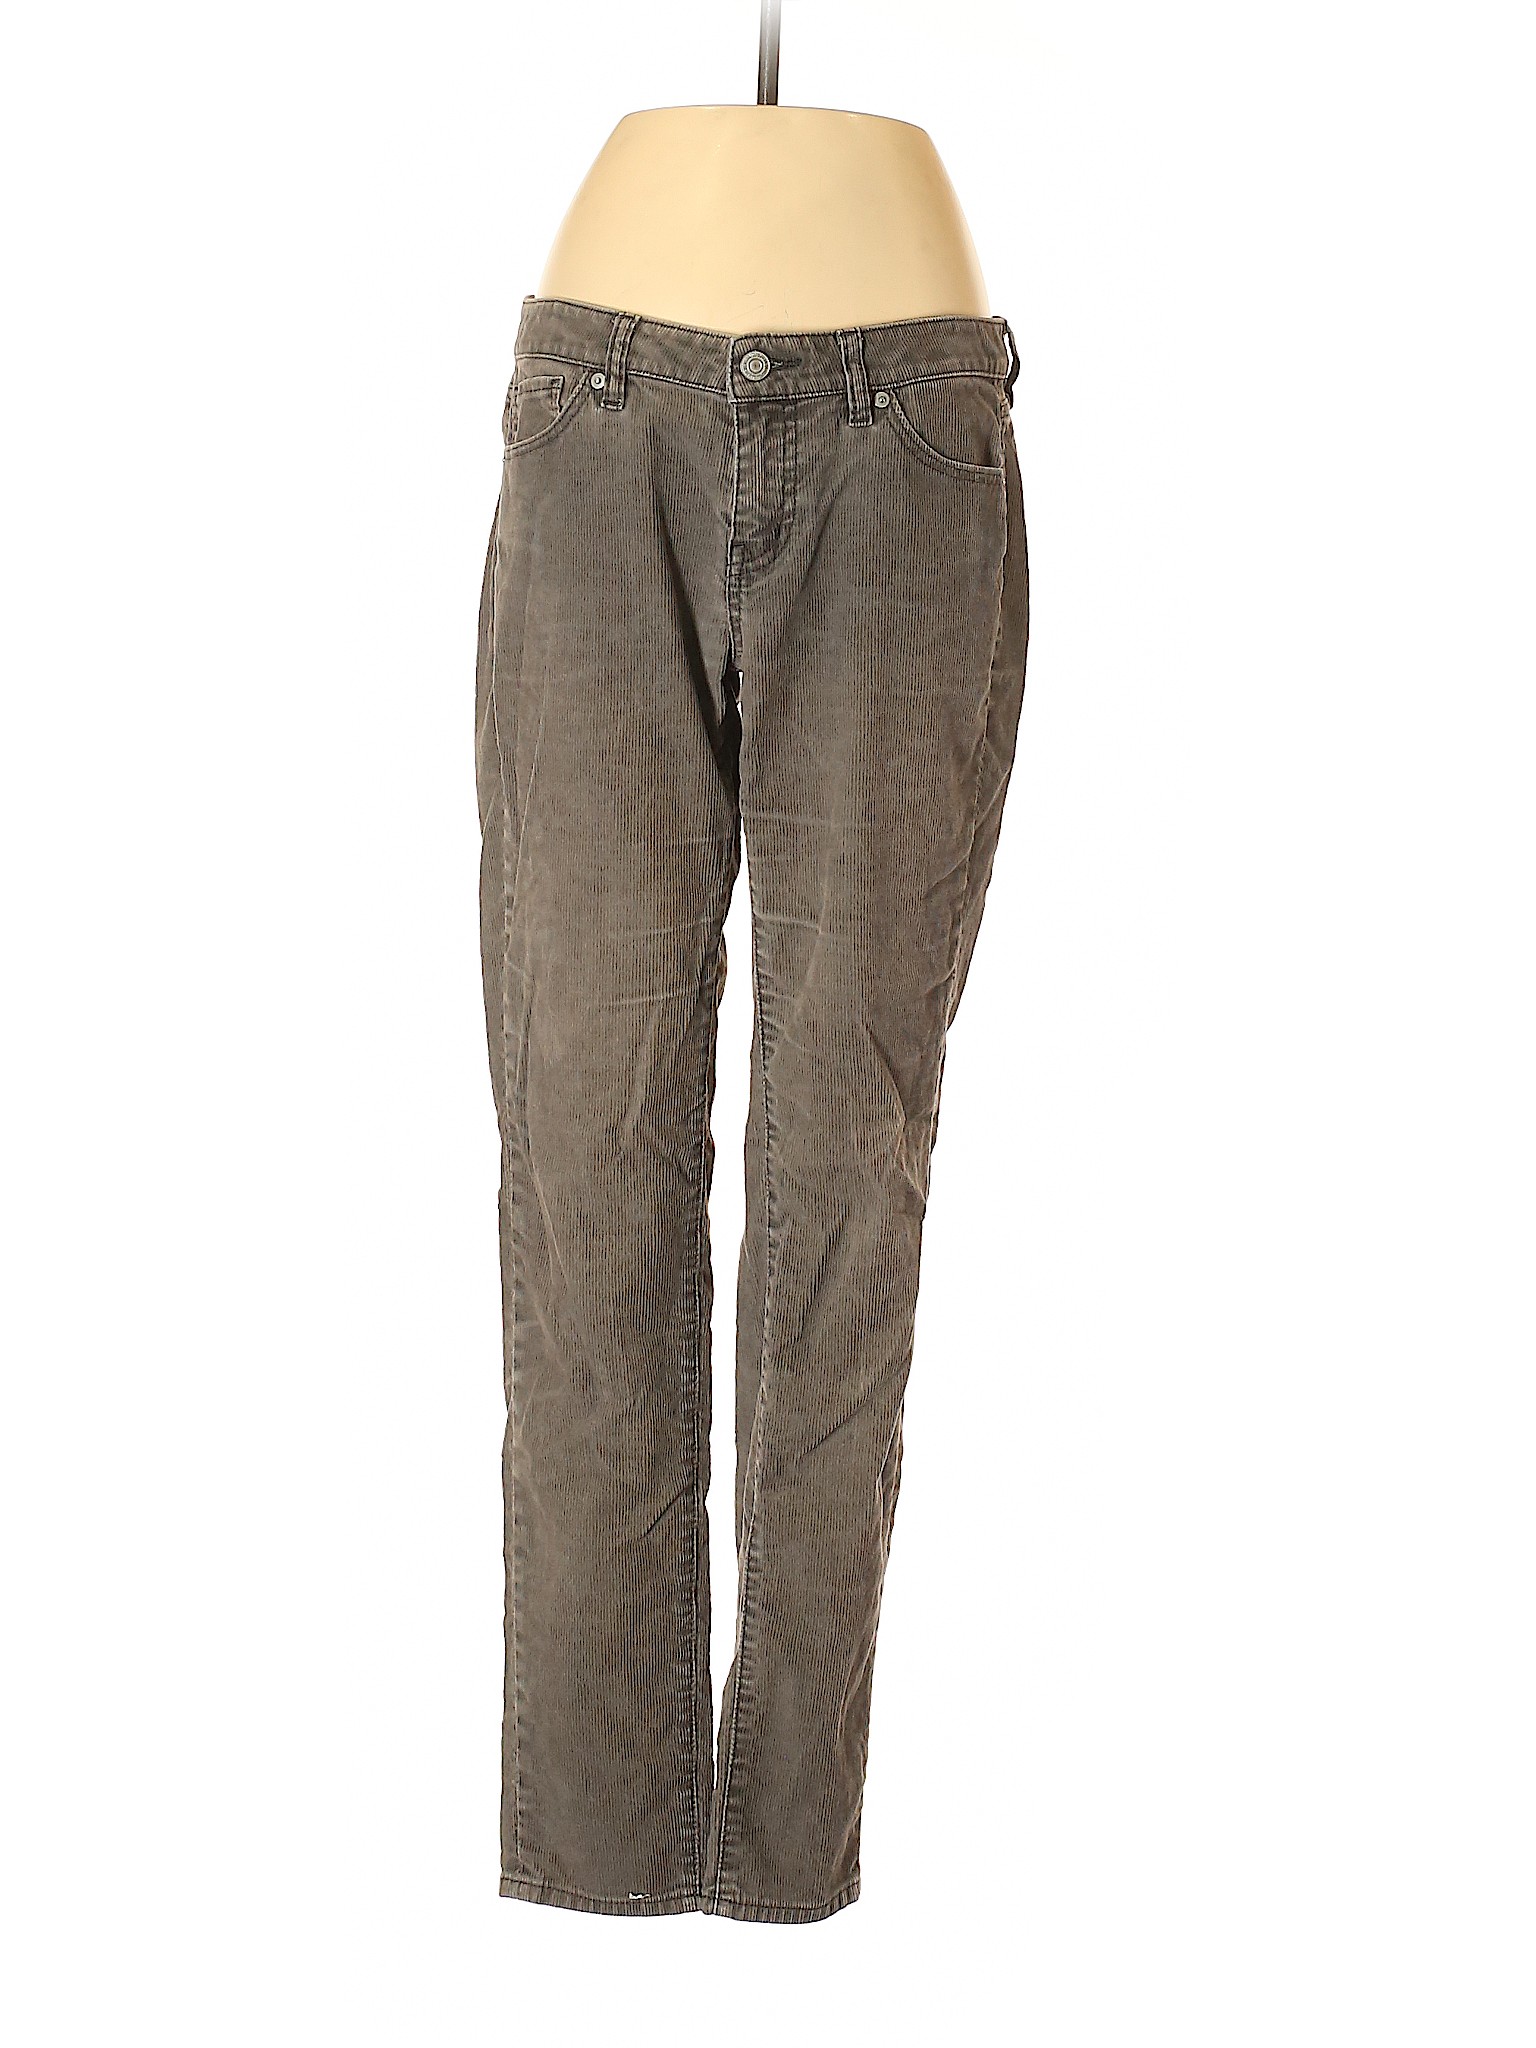  Uniqlo  Women Gray Cargo  Pants  26W eBay